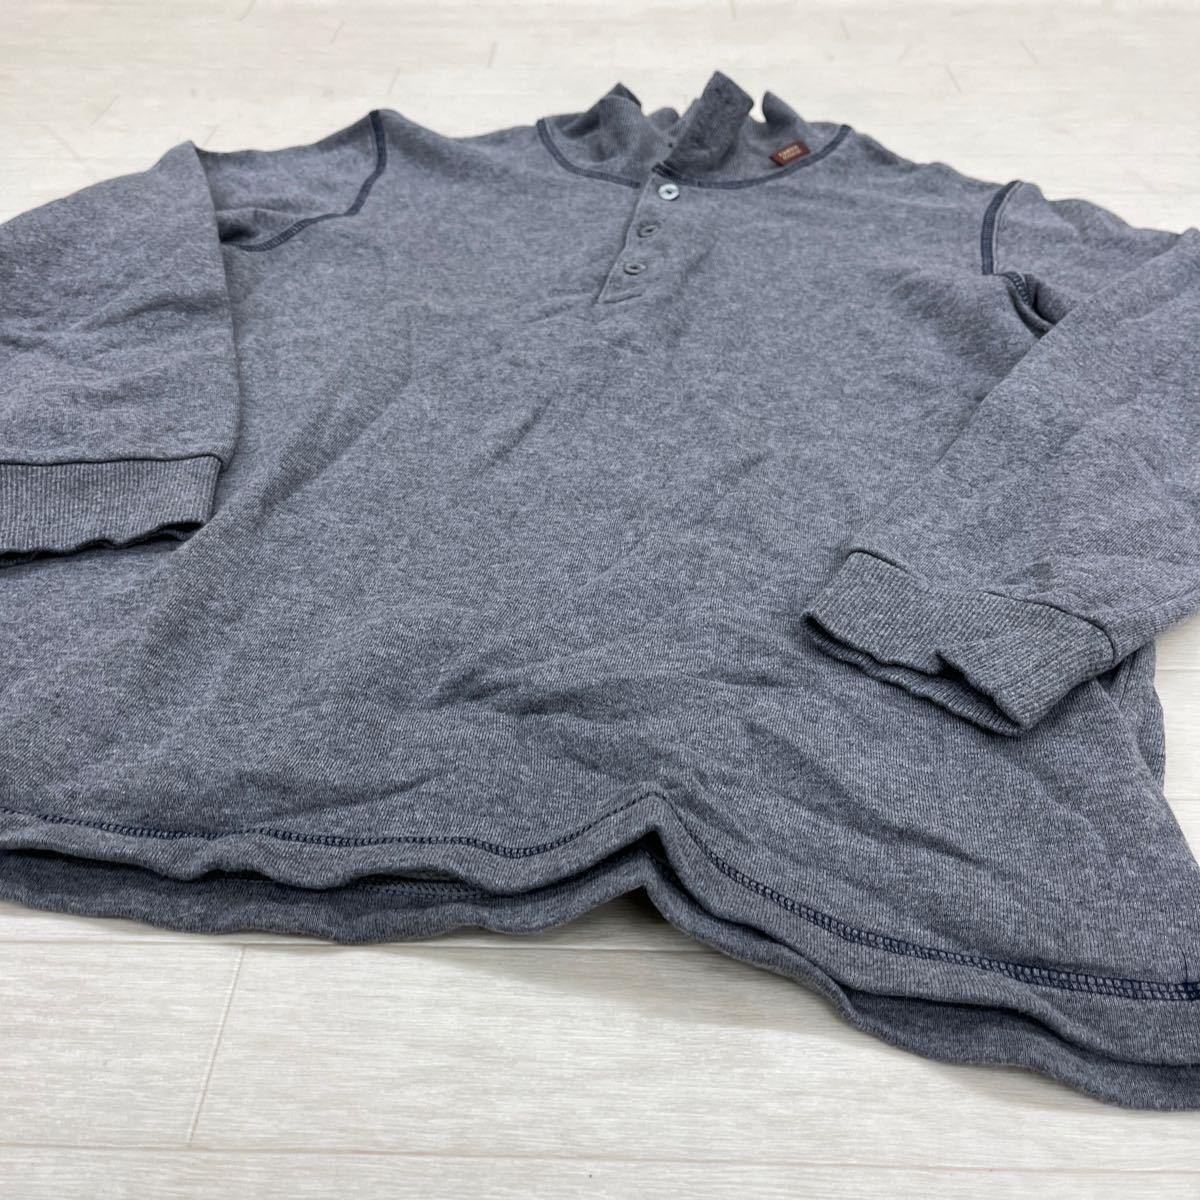 1345* TAKEO KIKUCHI Takeo Kikuchi tops sweat sweatshirt half button reverse side nappy long sleeve plain casual gray men's L